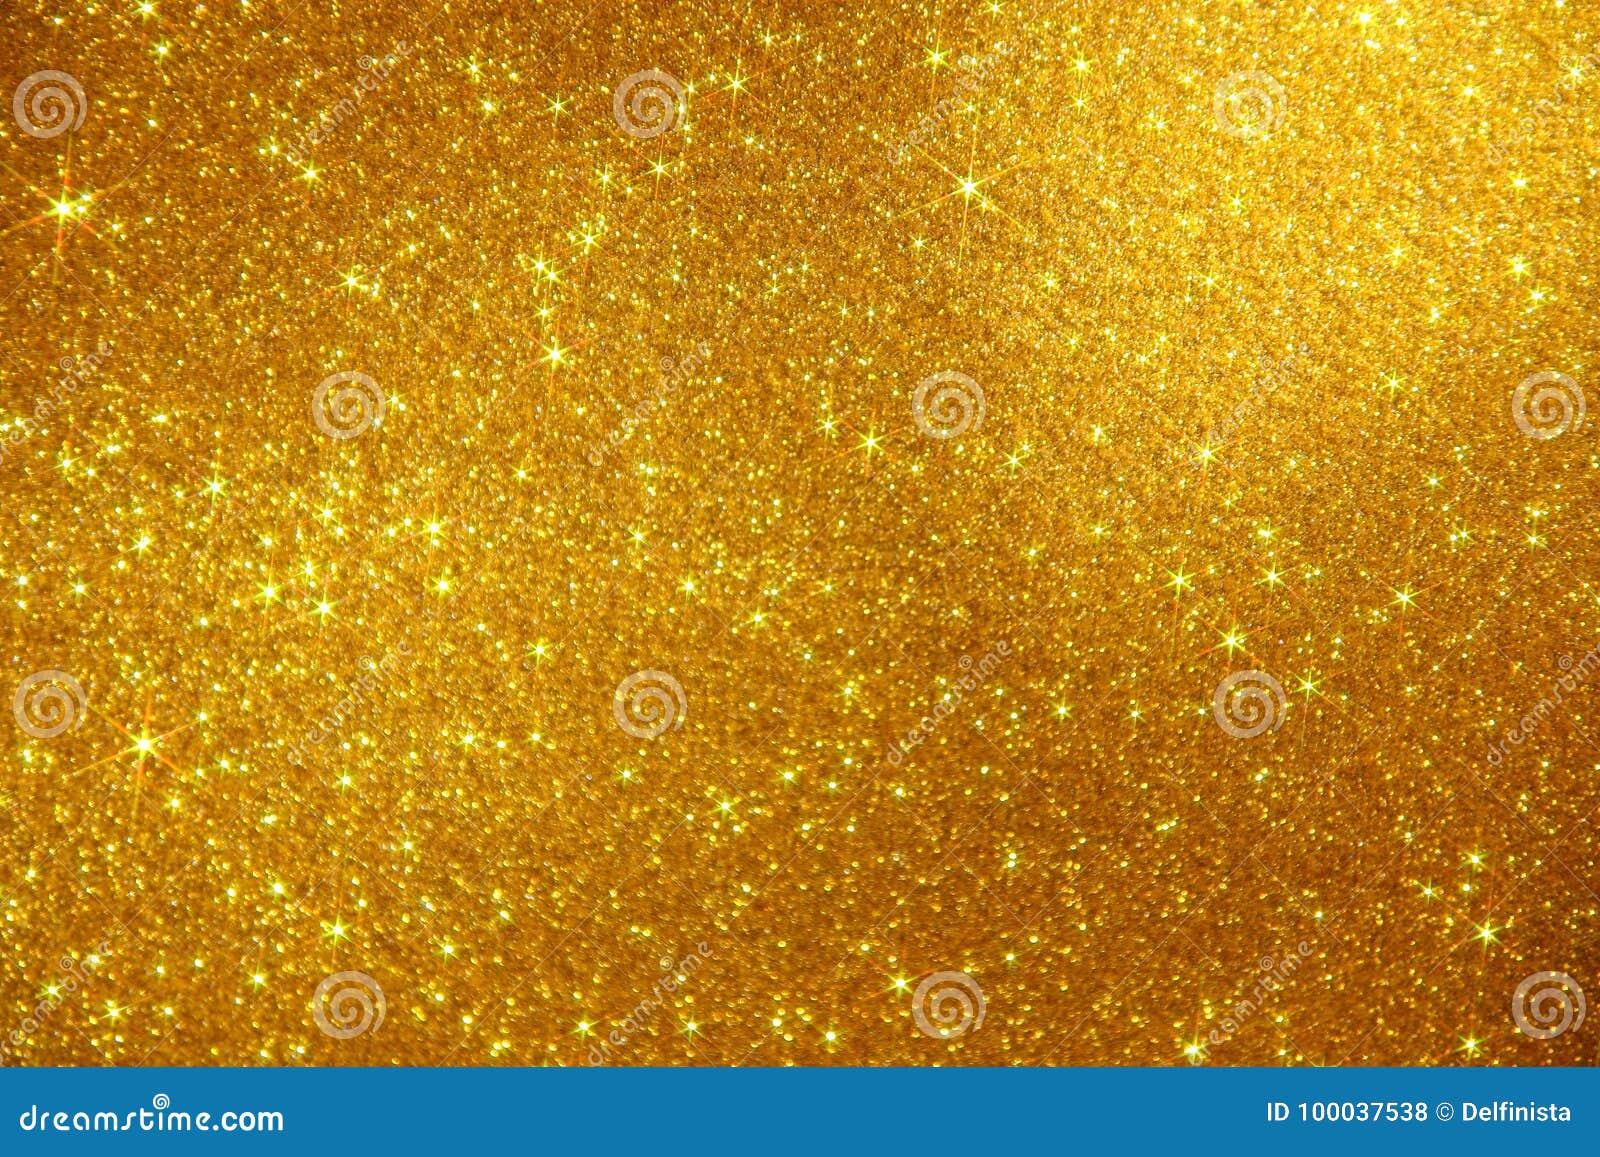 gold glitter stars sparkle background - stock photo